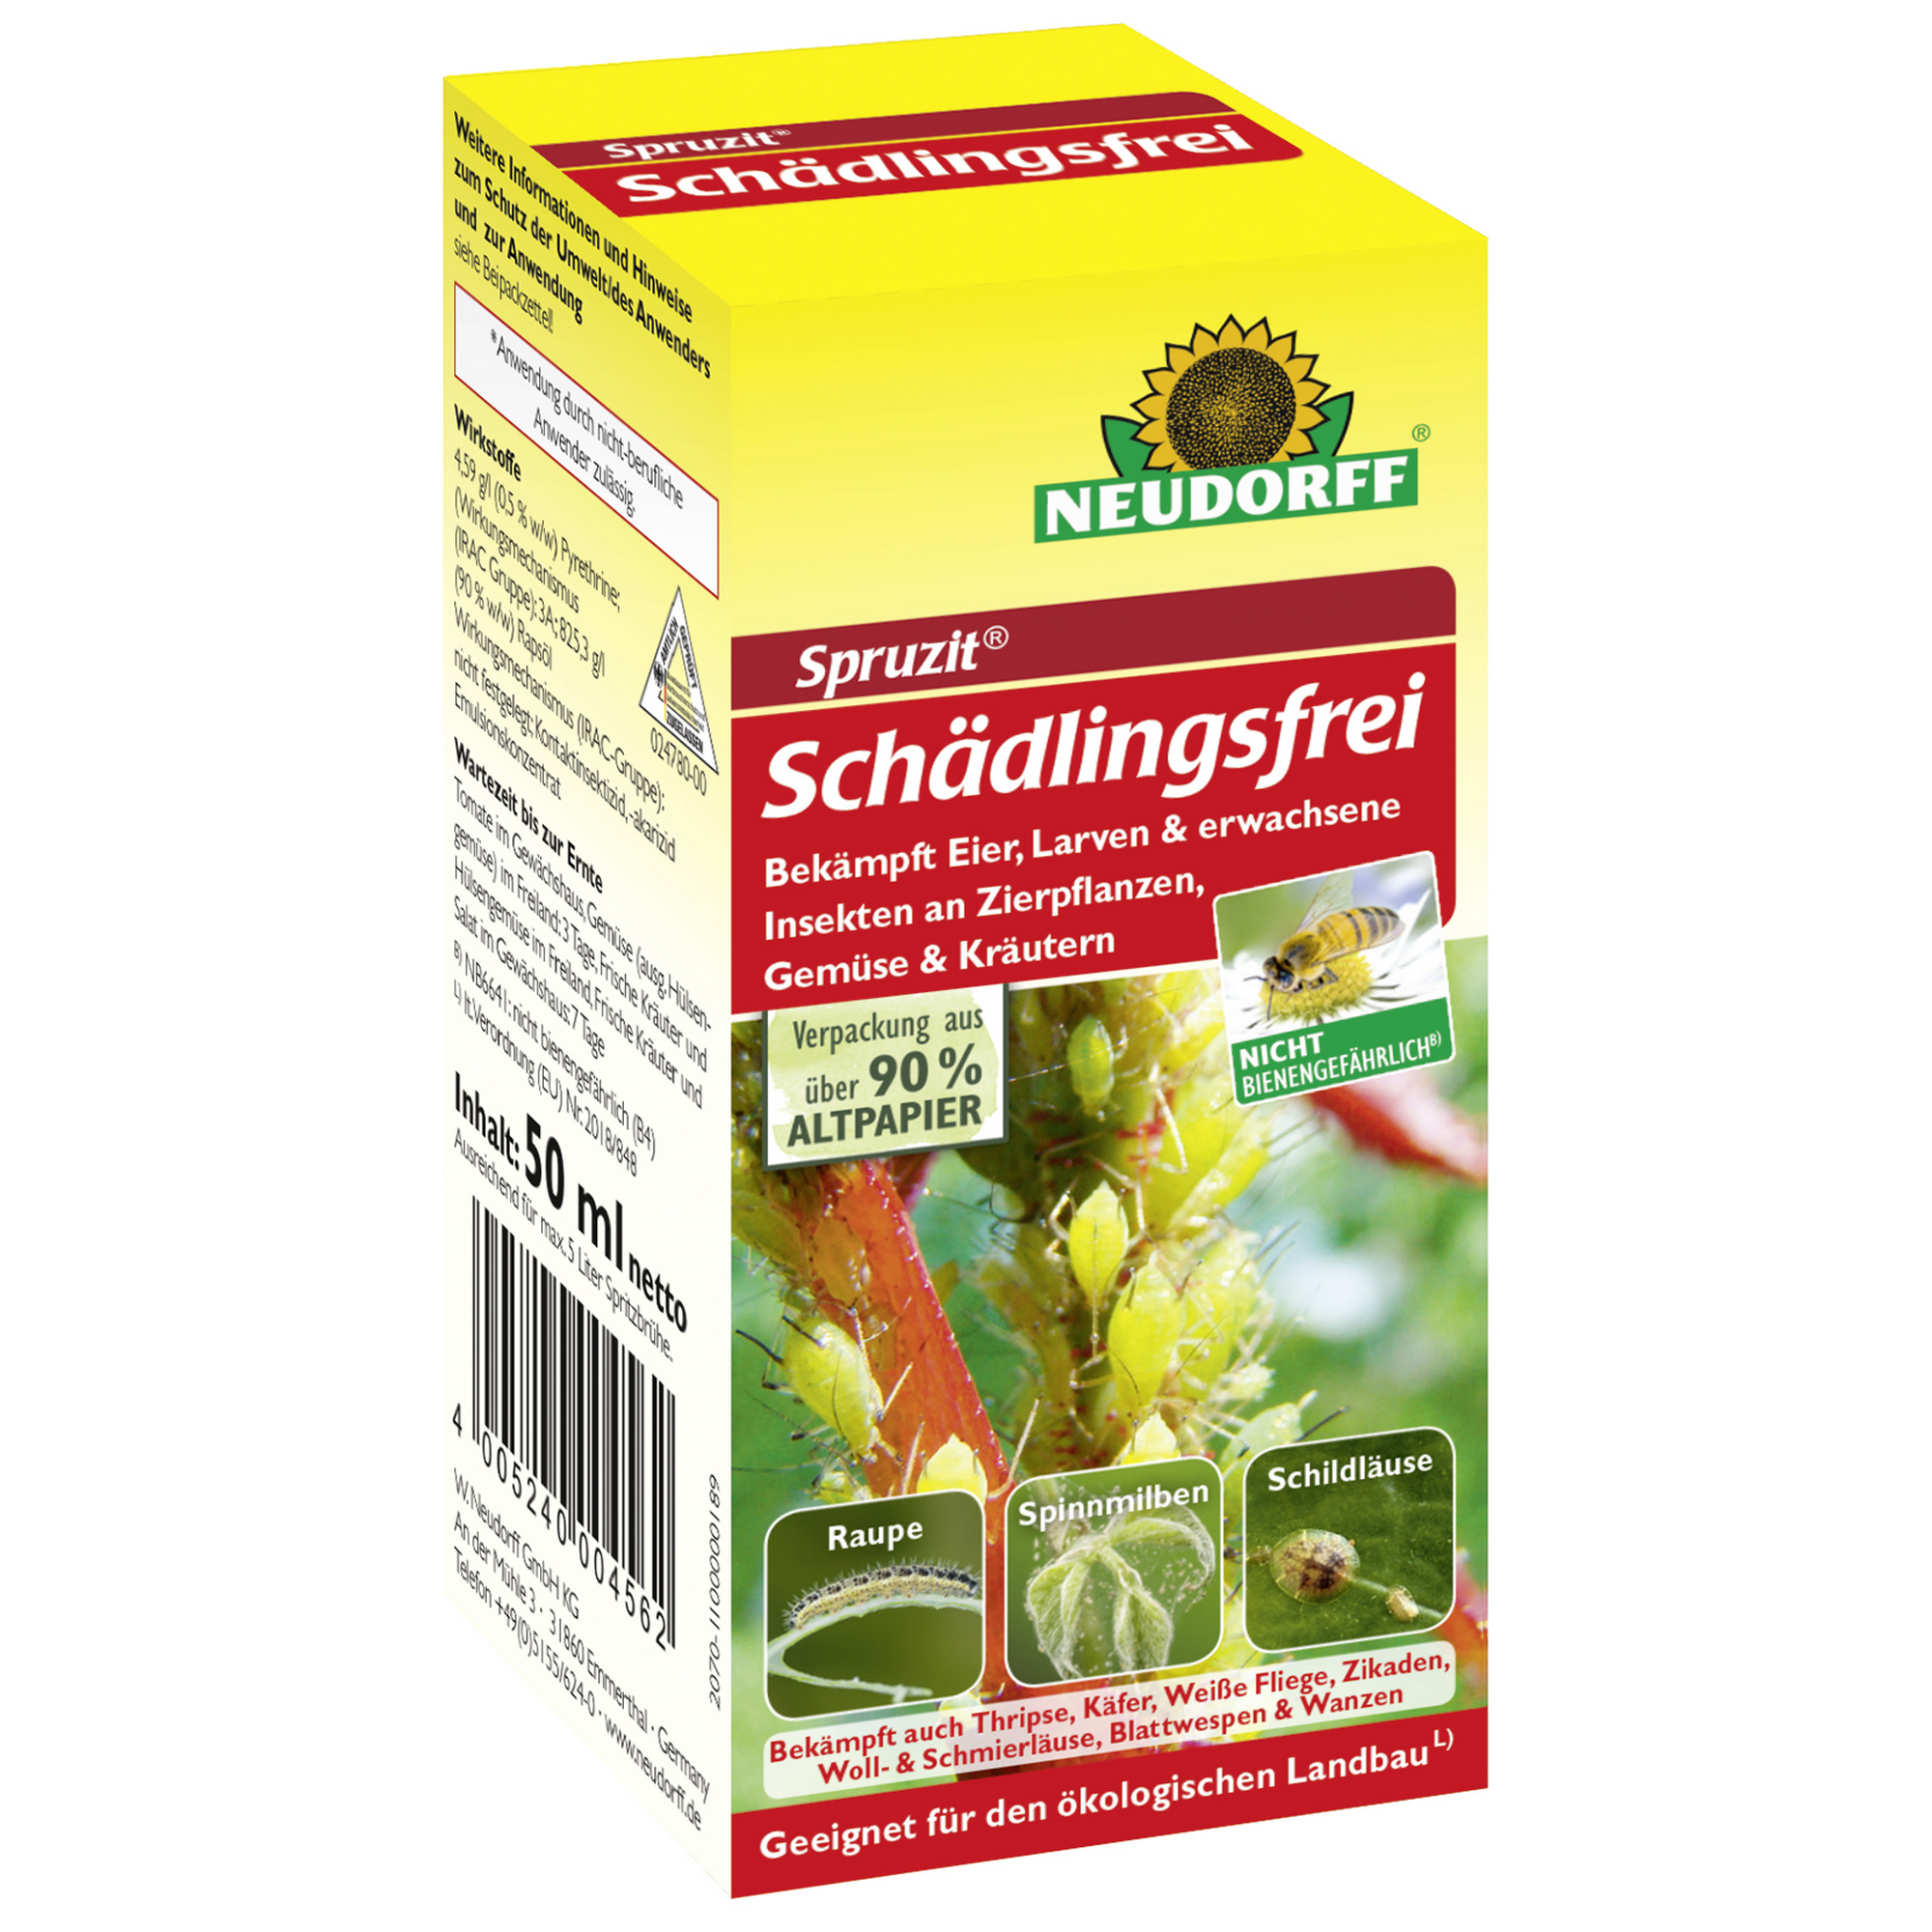 Spruzit Schädlingsfrei 50 ml + product picture